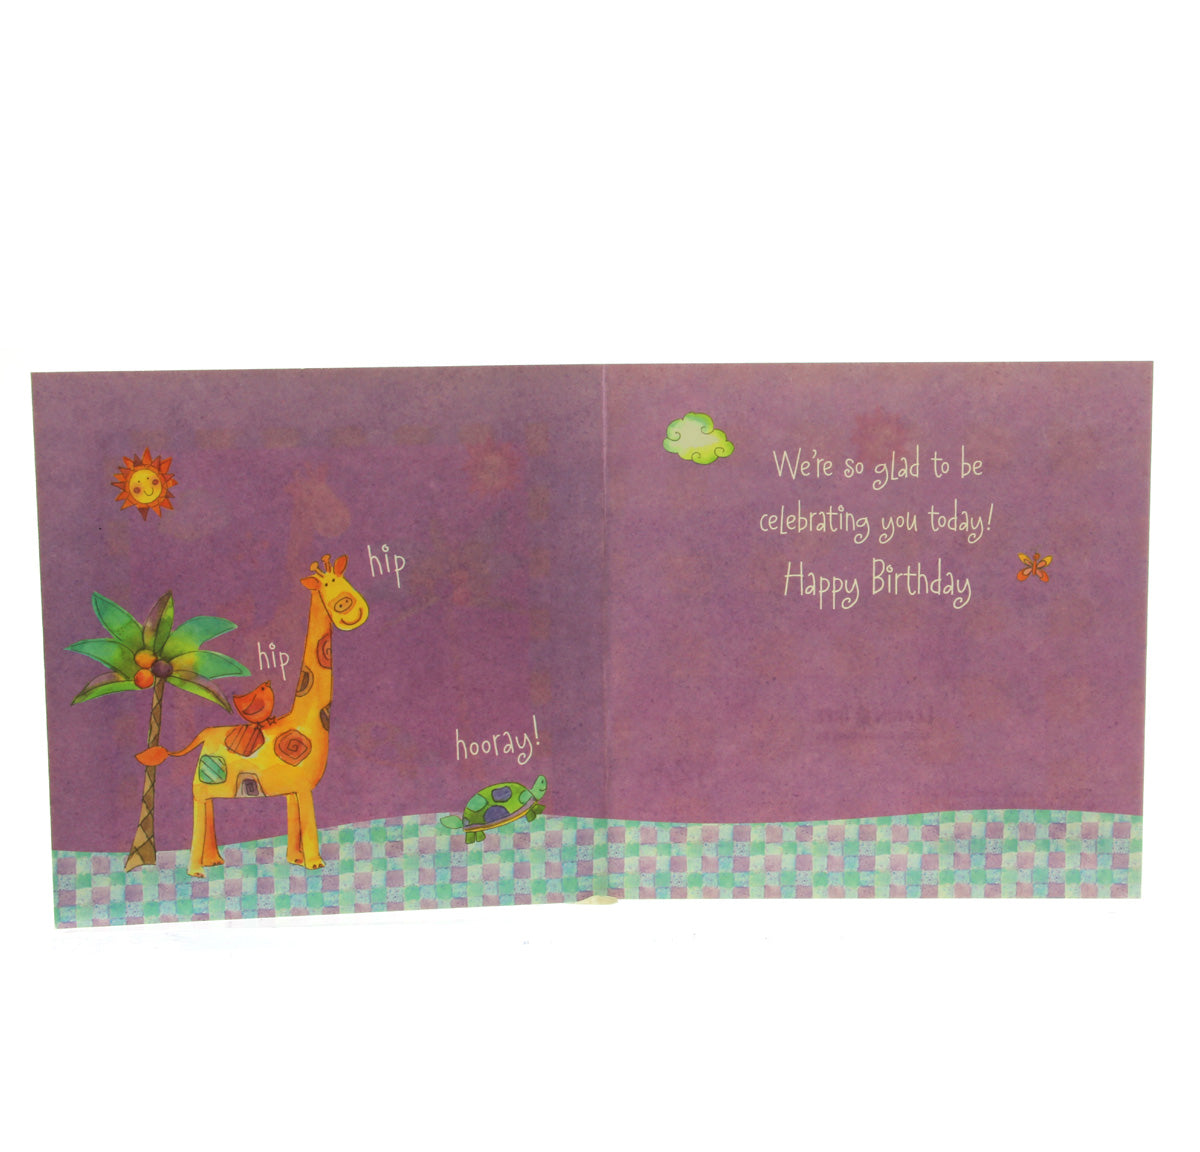 Birthday Card Qubes: (Giraffe on front)